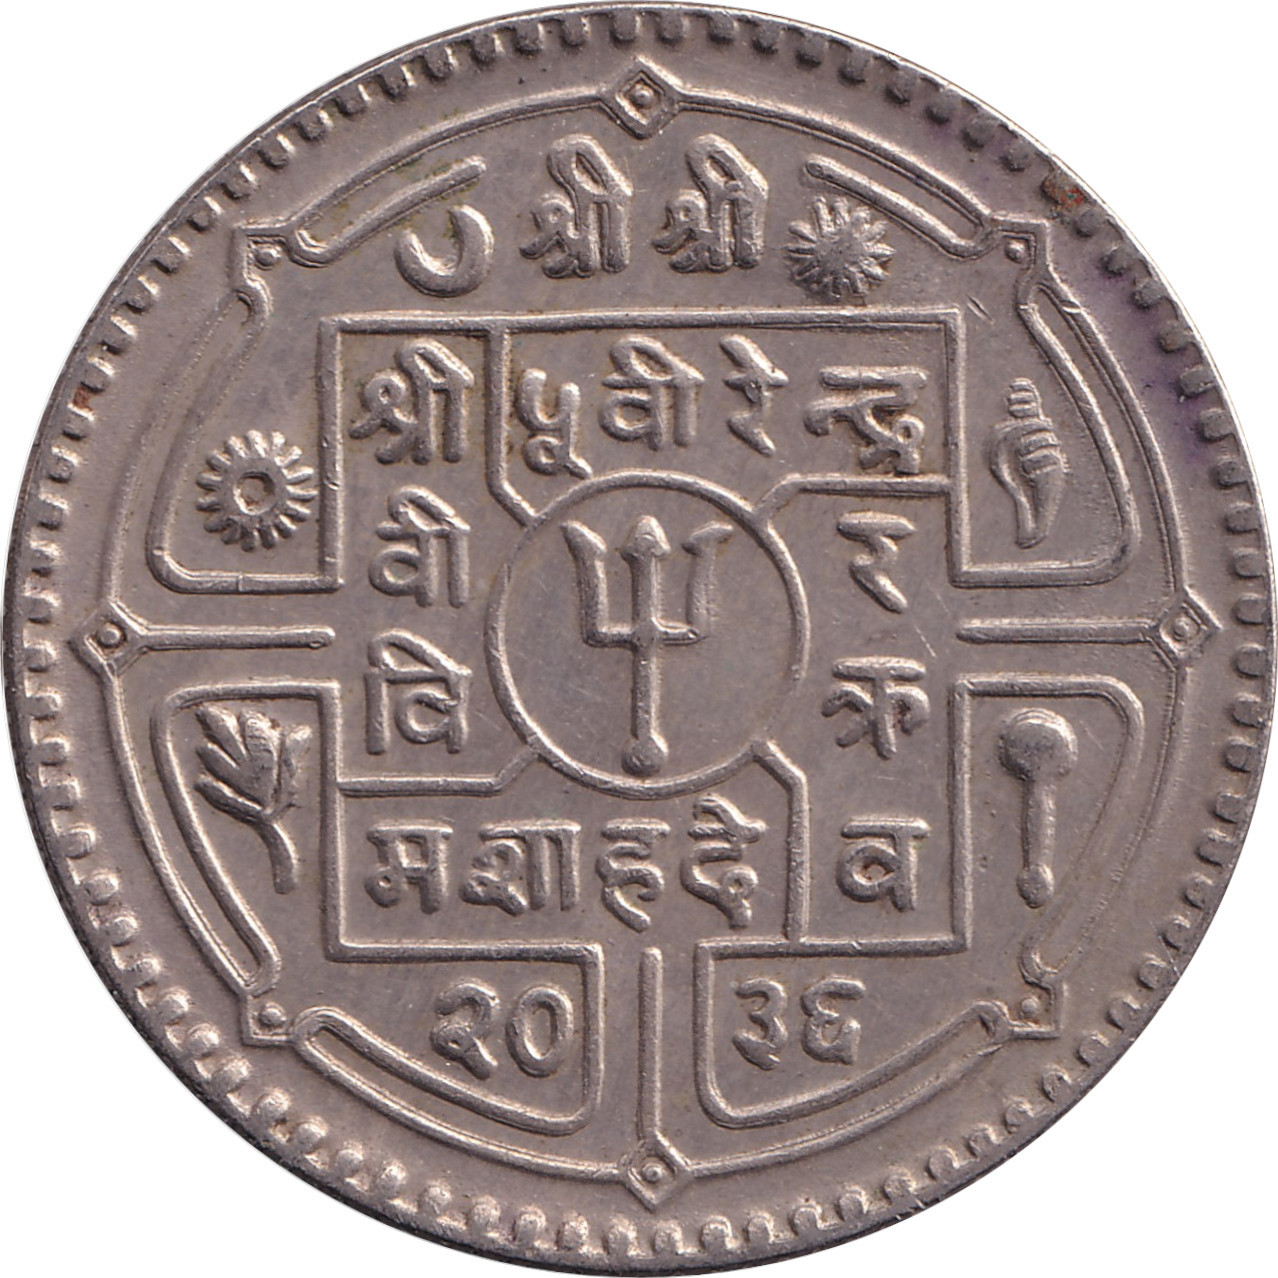 1 rupee - Birendra Bir Bikram - Trident - Type 1